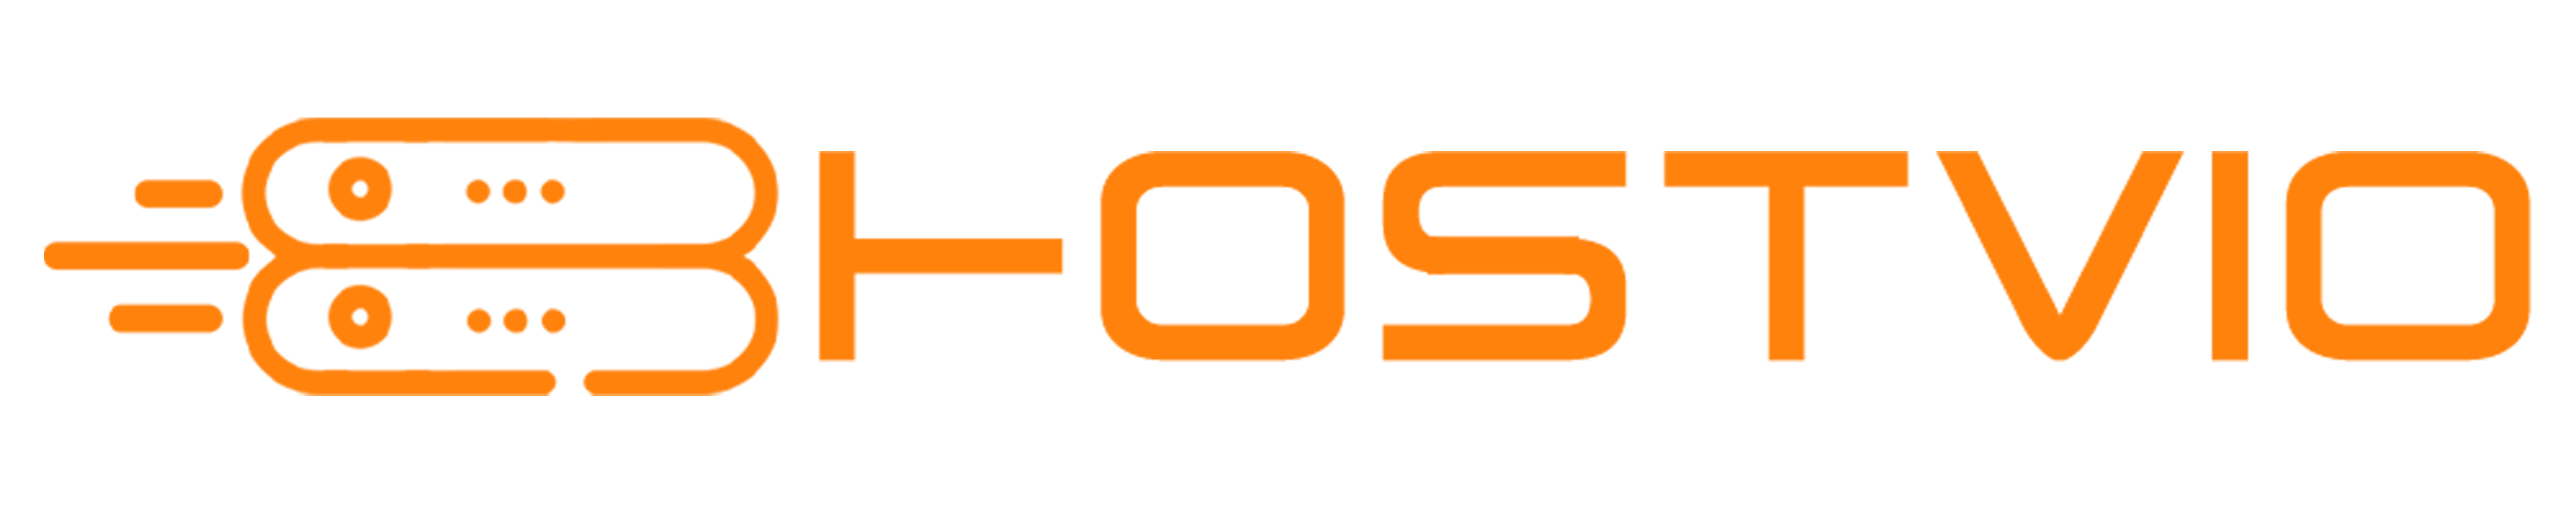 Hostvio logo